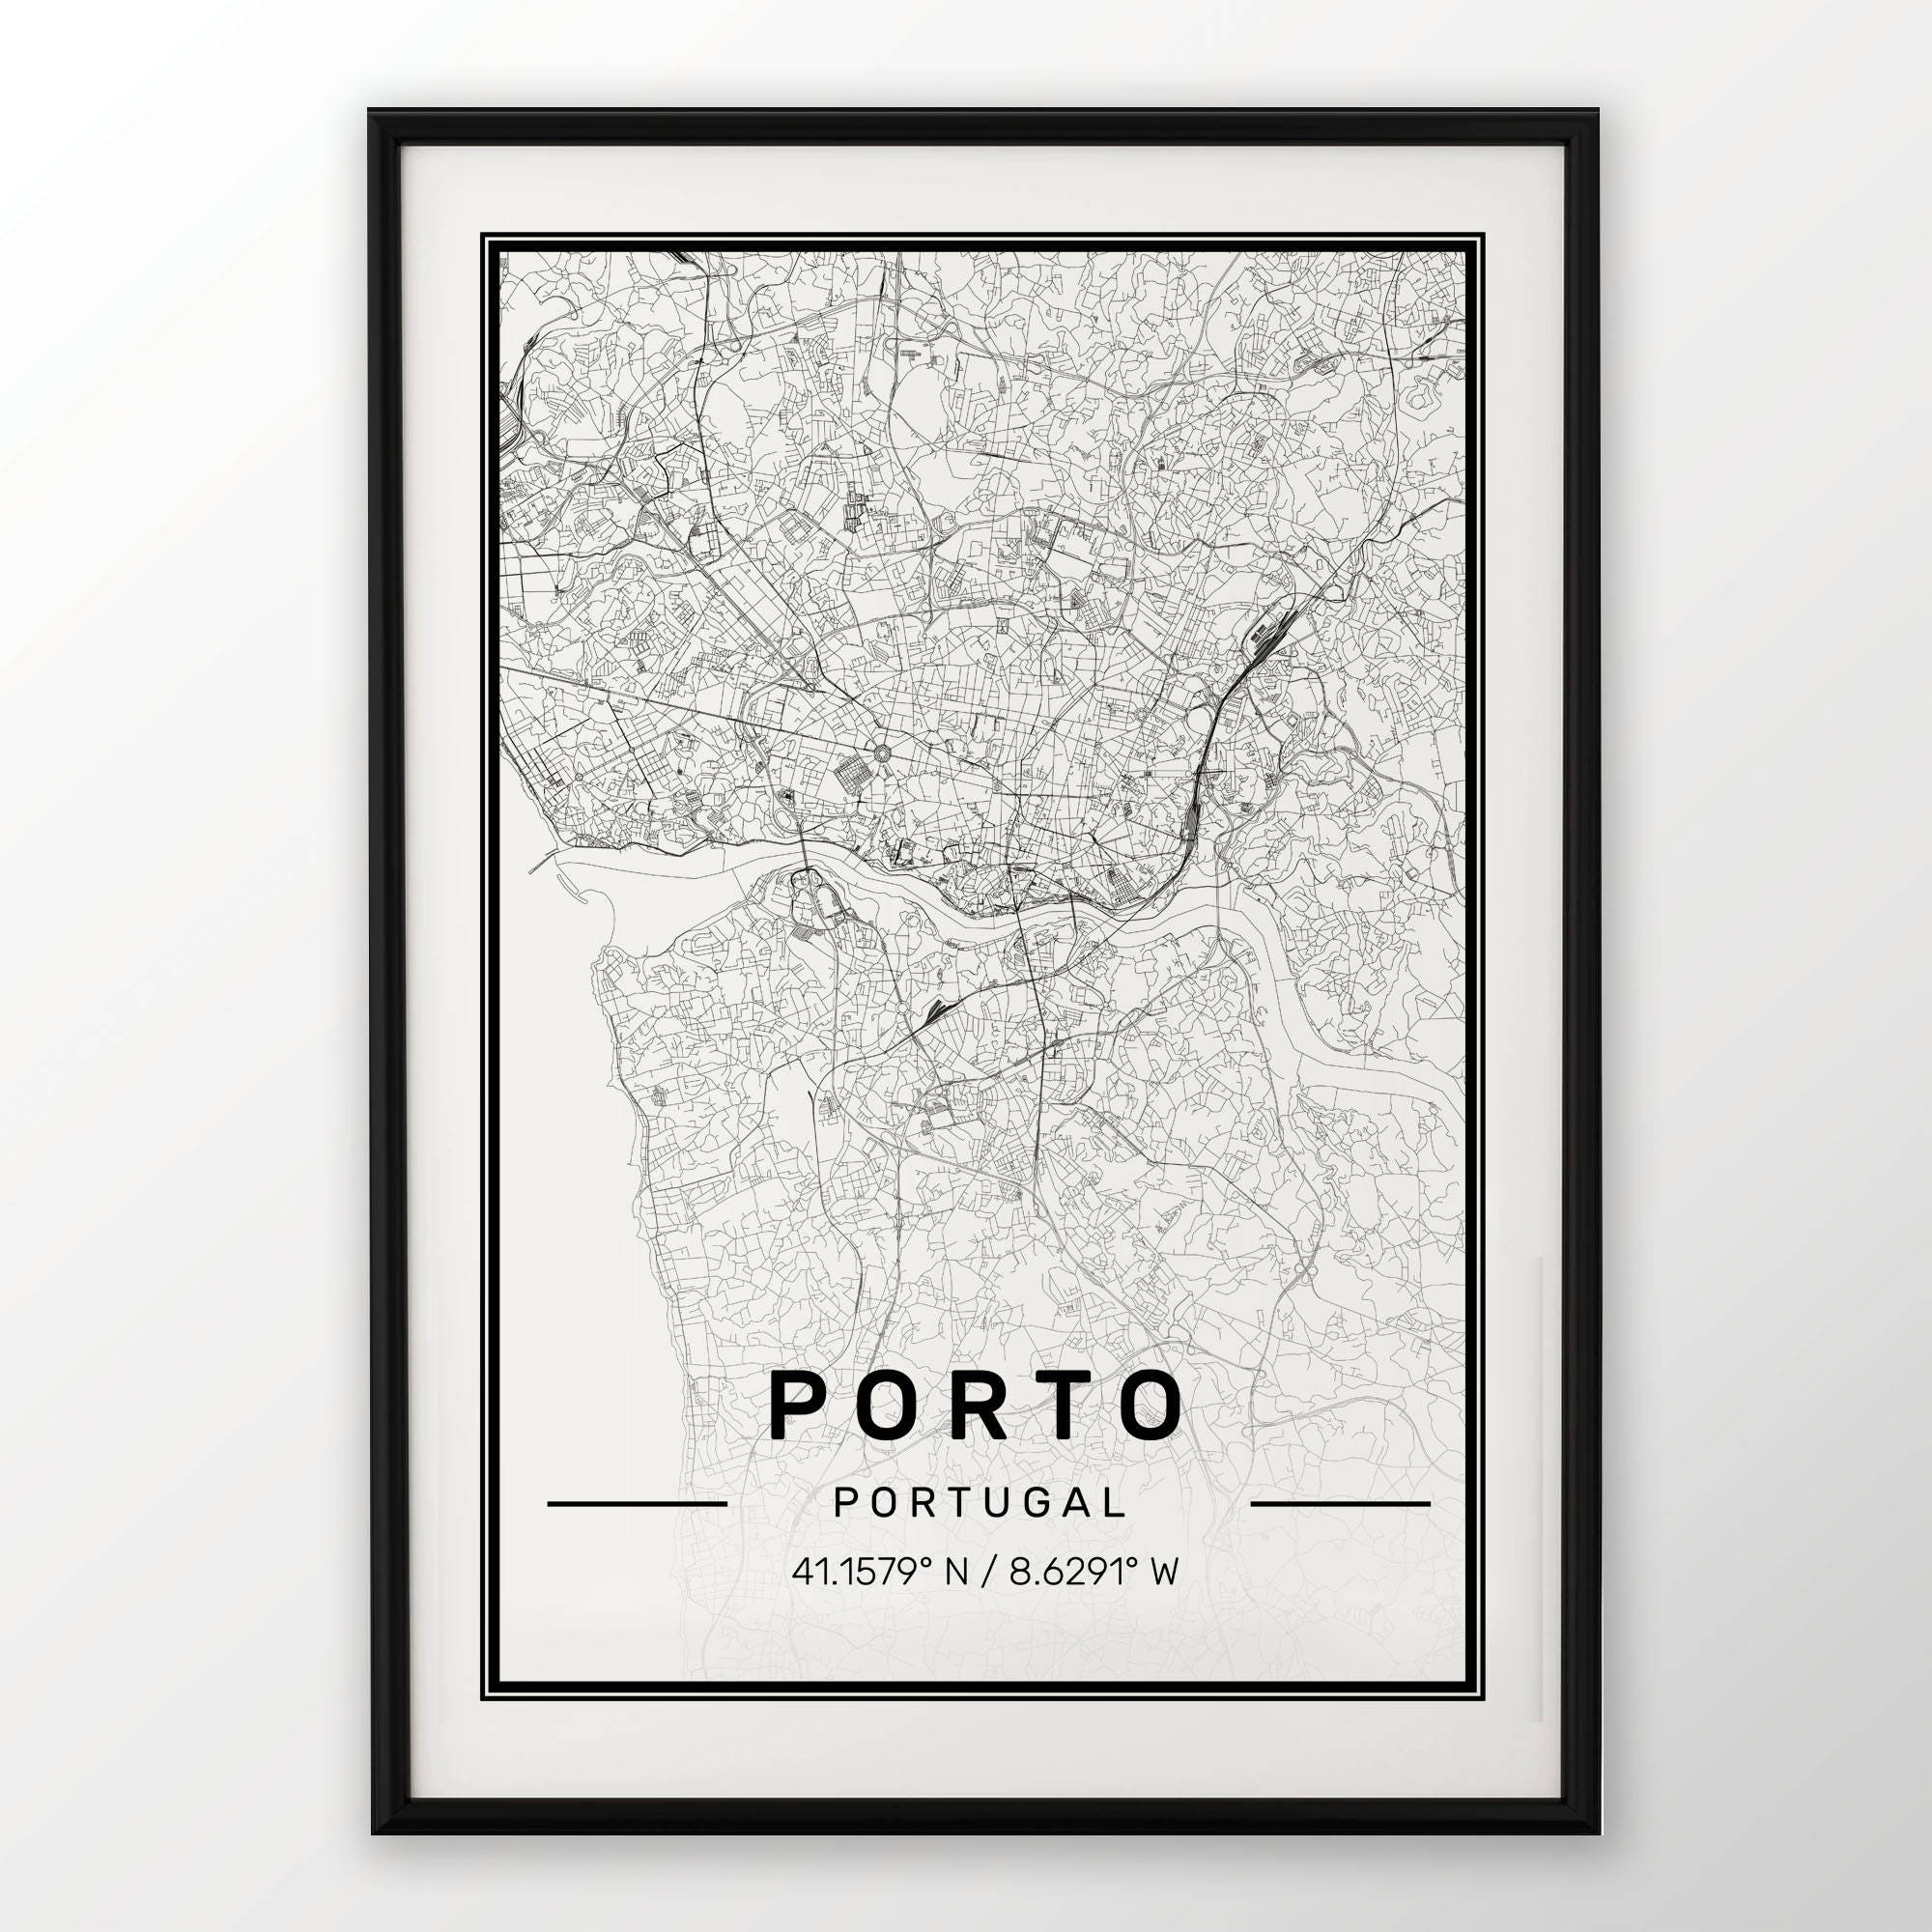 PORTO CITY MAP POSTER PRINT MODERN CONTEMPORARY CITIES TRAVEL IKEA FRAMES 